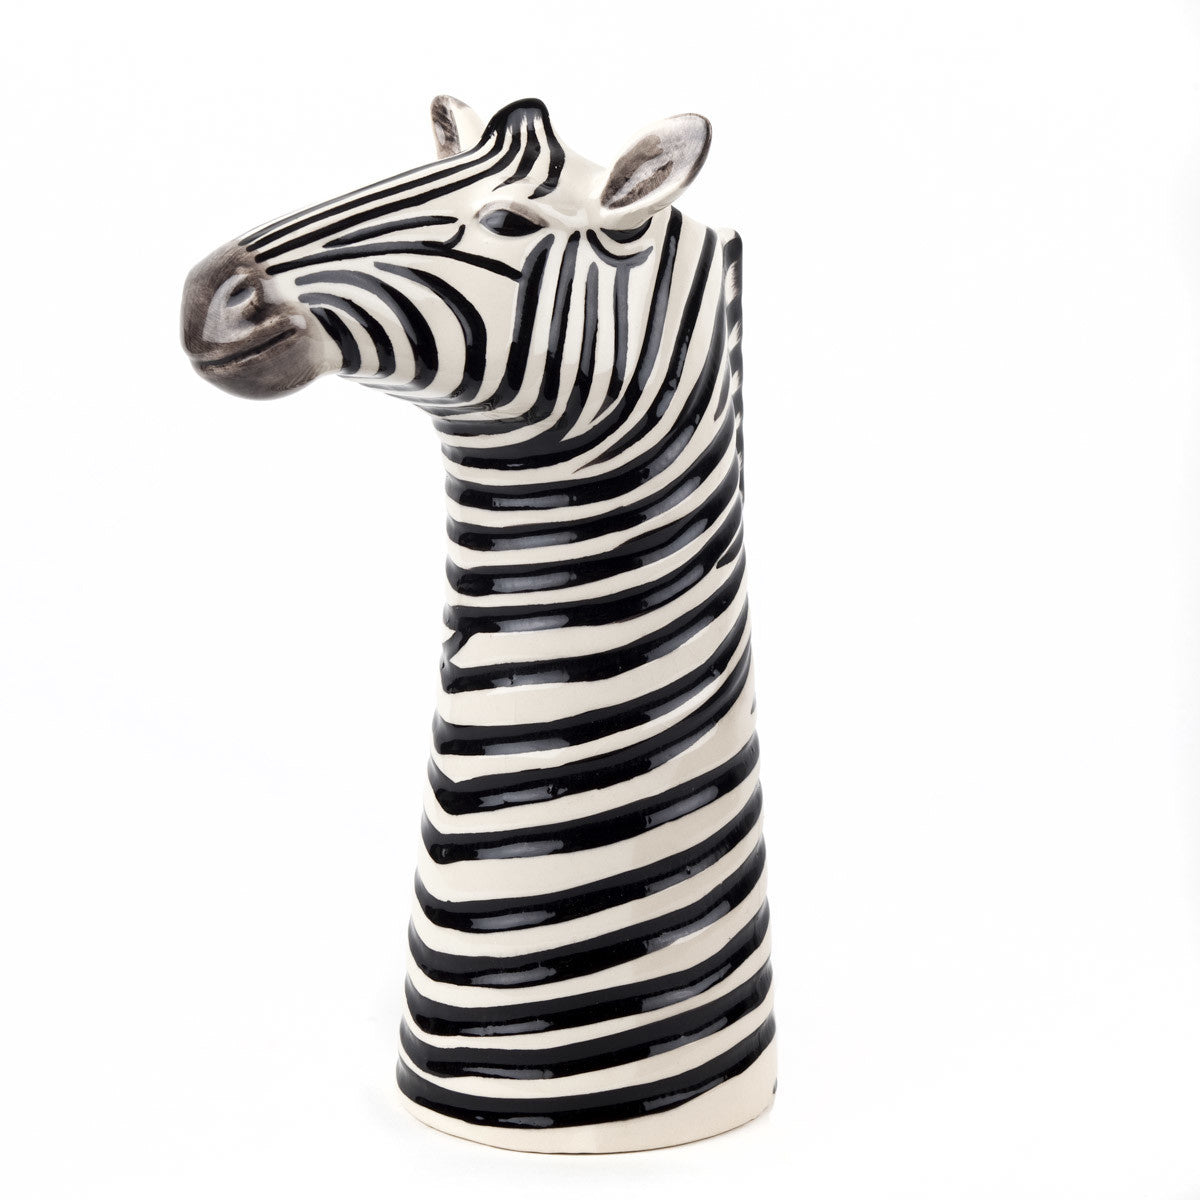 Zebra vaas1